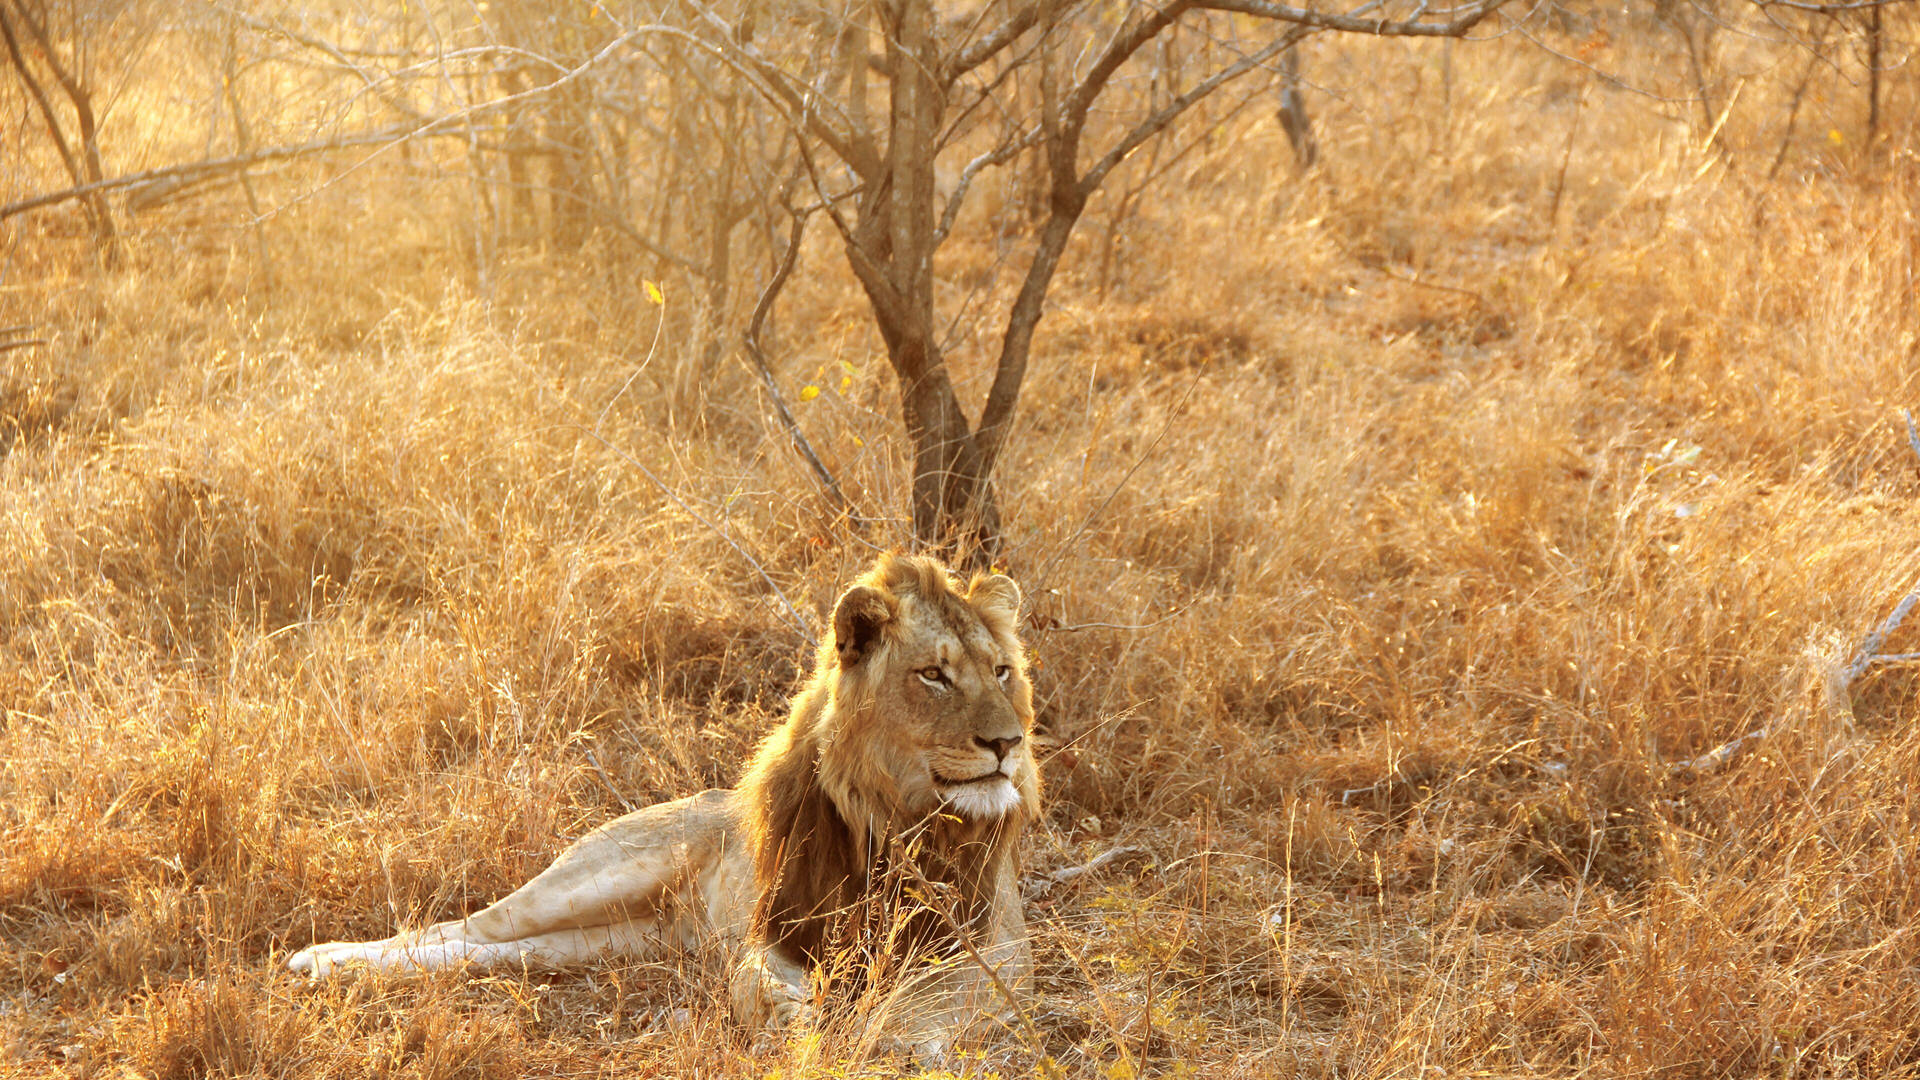 Resting Lion In Africa 4k Background